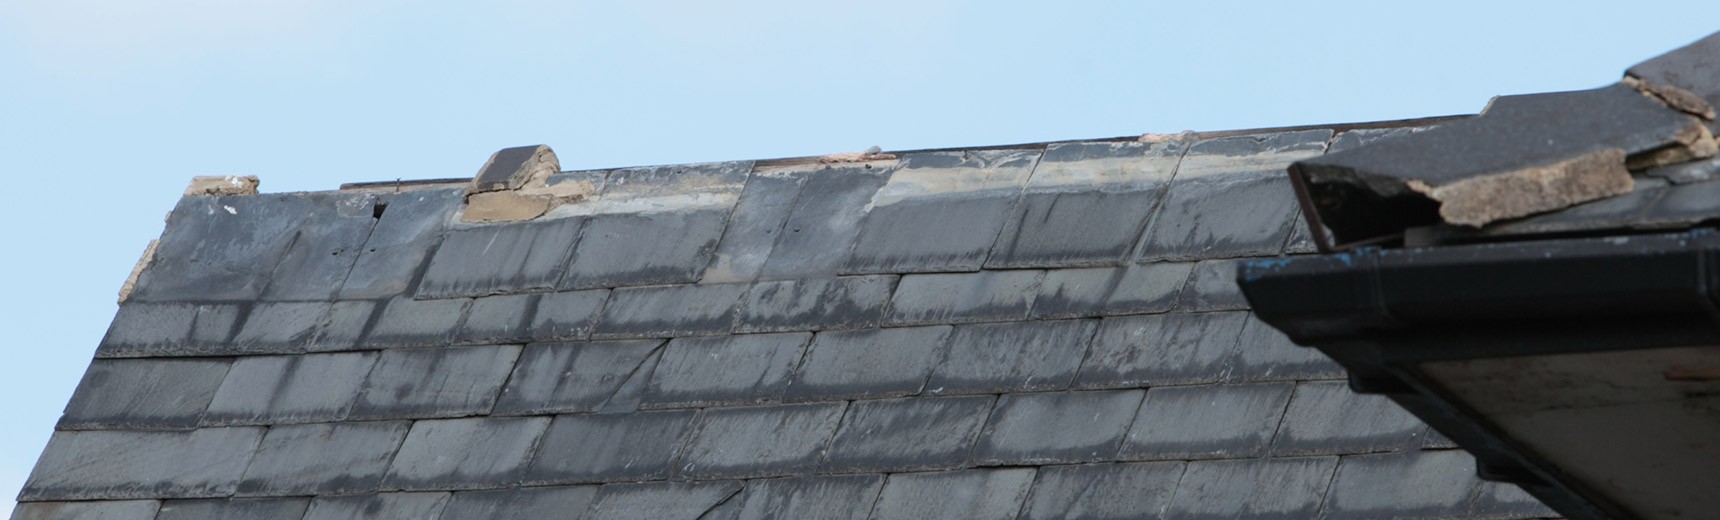 Slate tiles on a roof